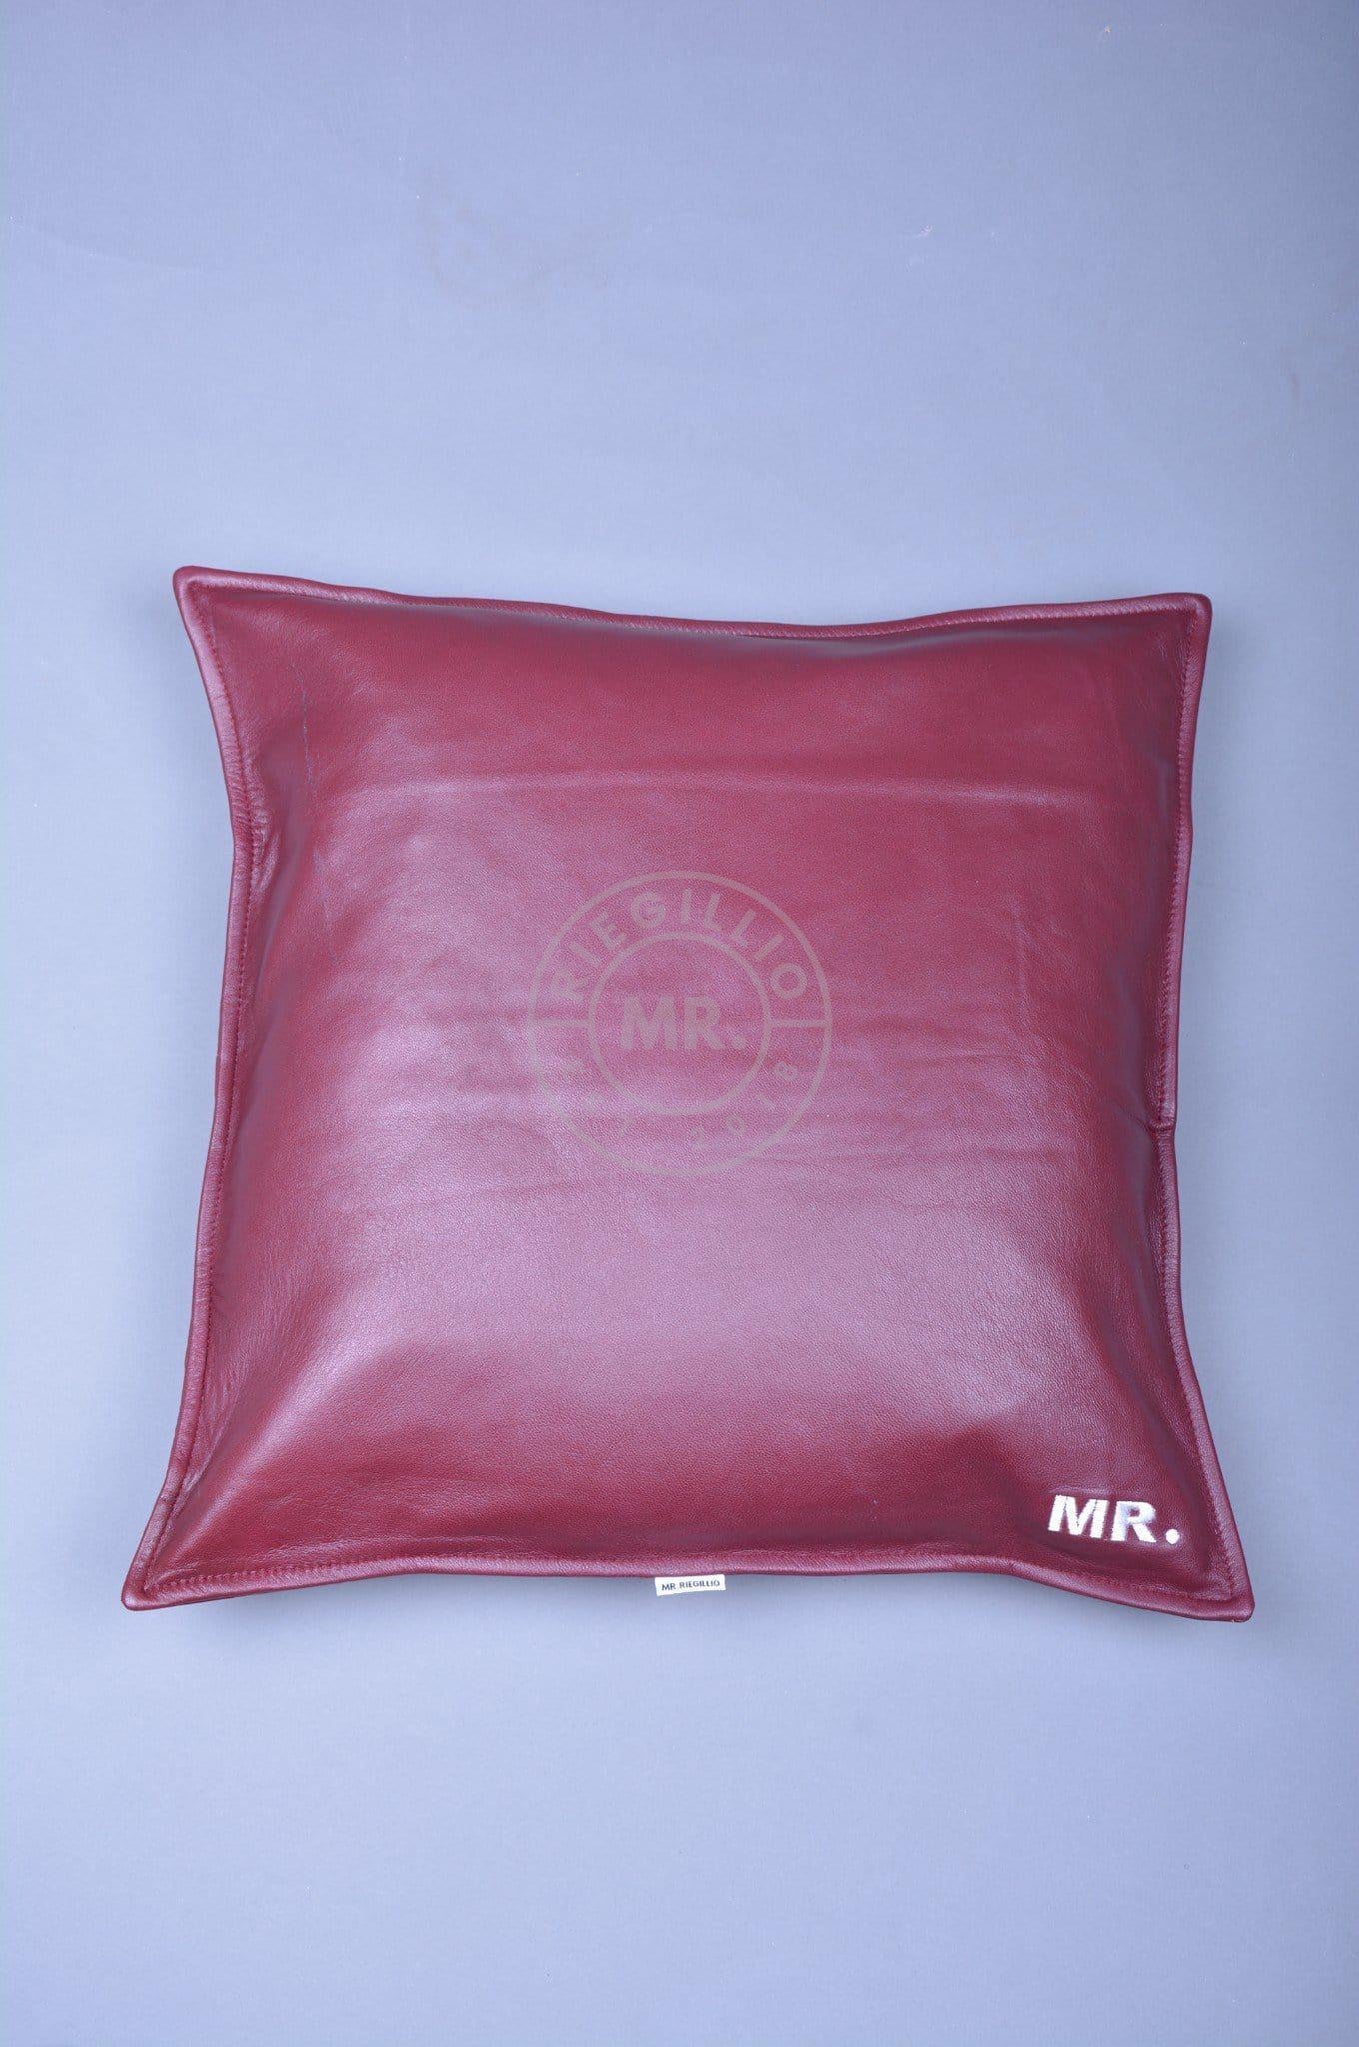 Burgundy Leather Pillow-at MR. Riegillio